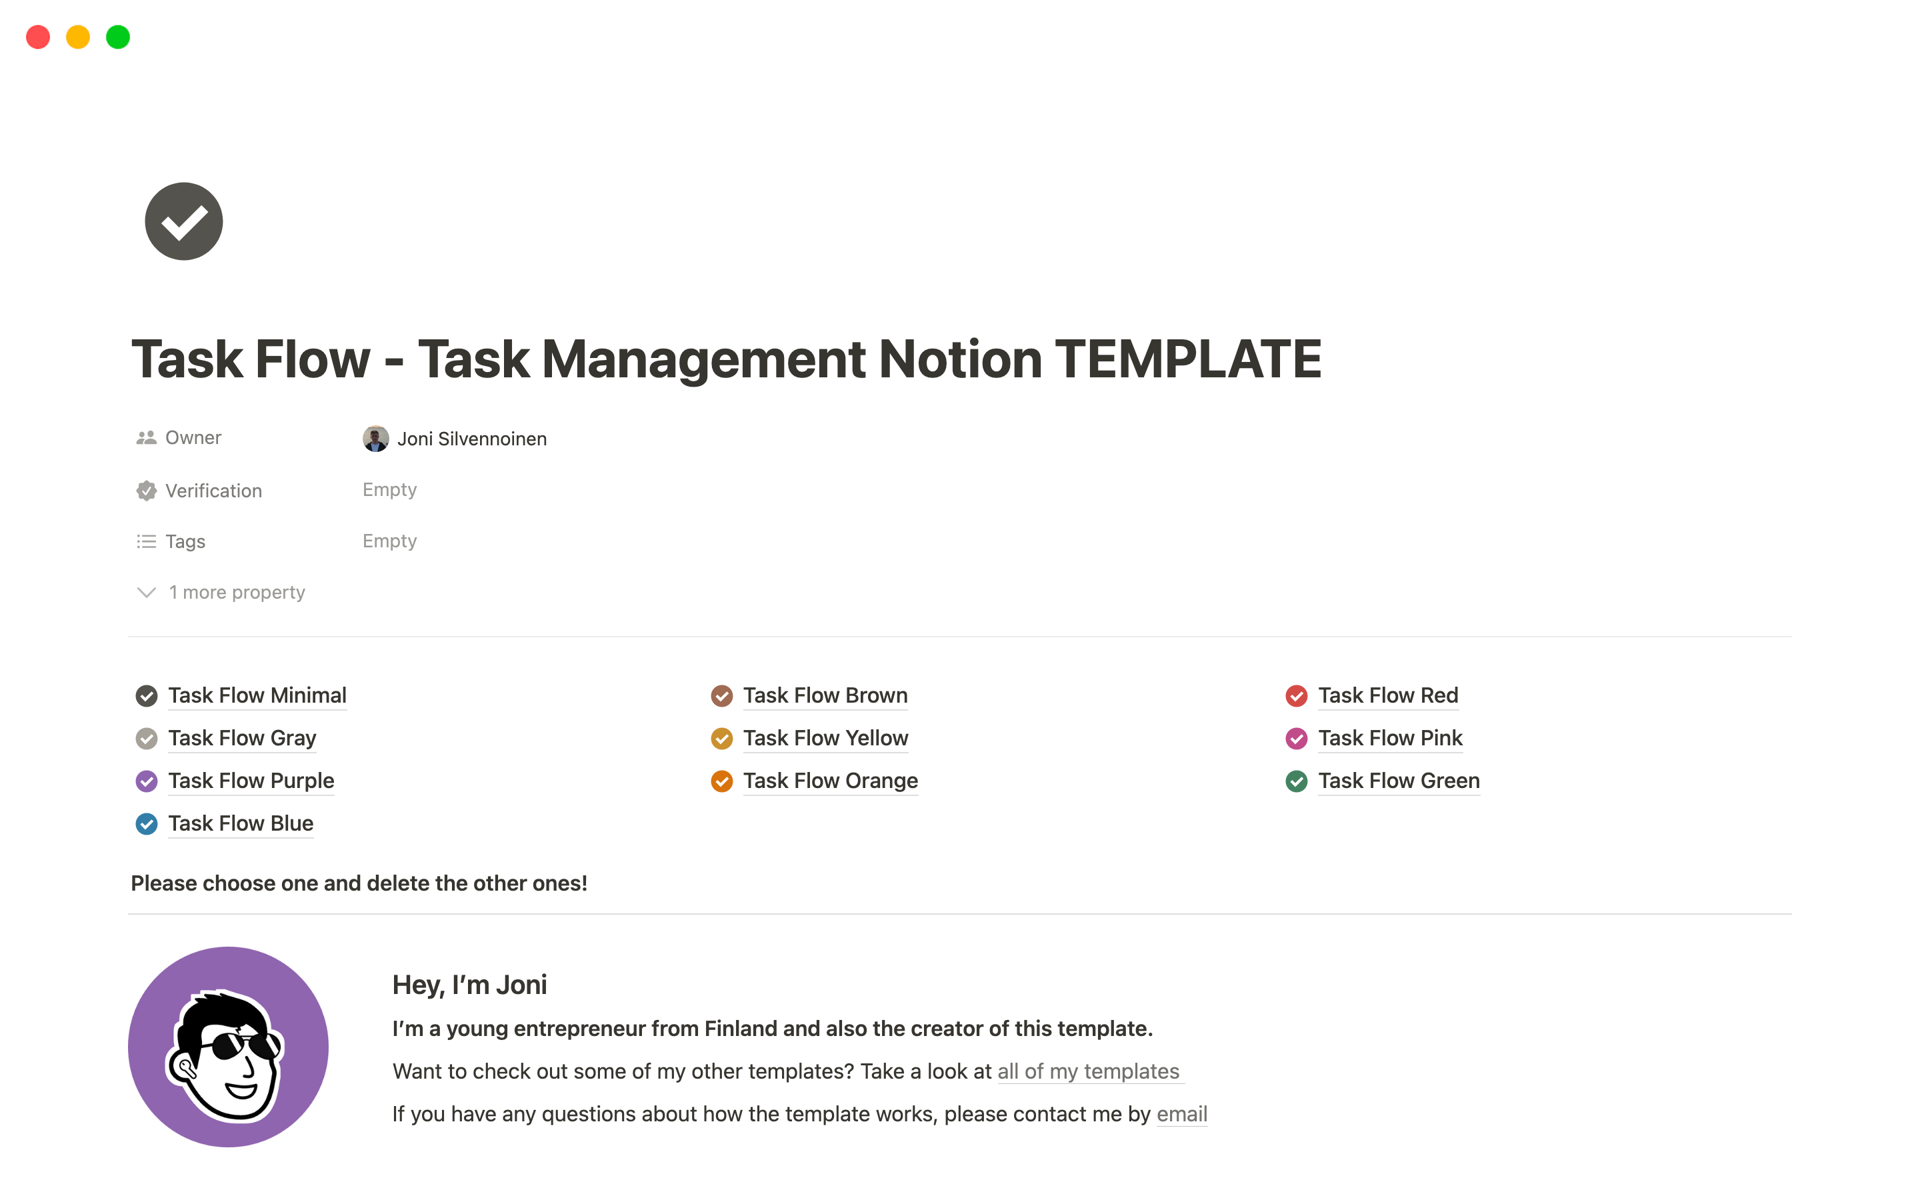 Task Flow - Task Management Notion Template님의 템플릿 미리보기